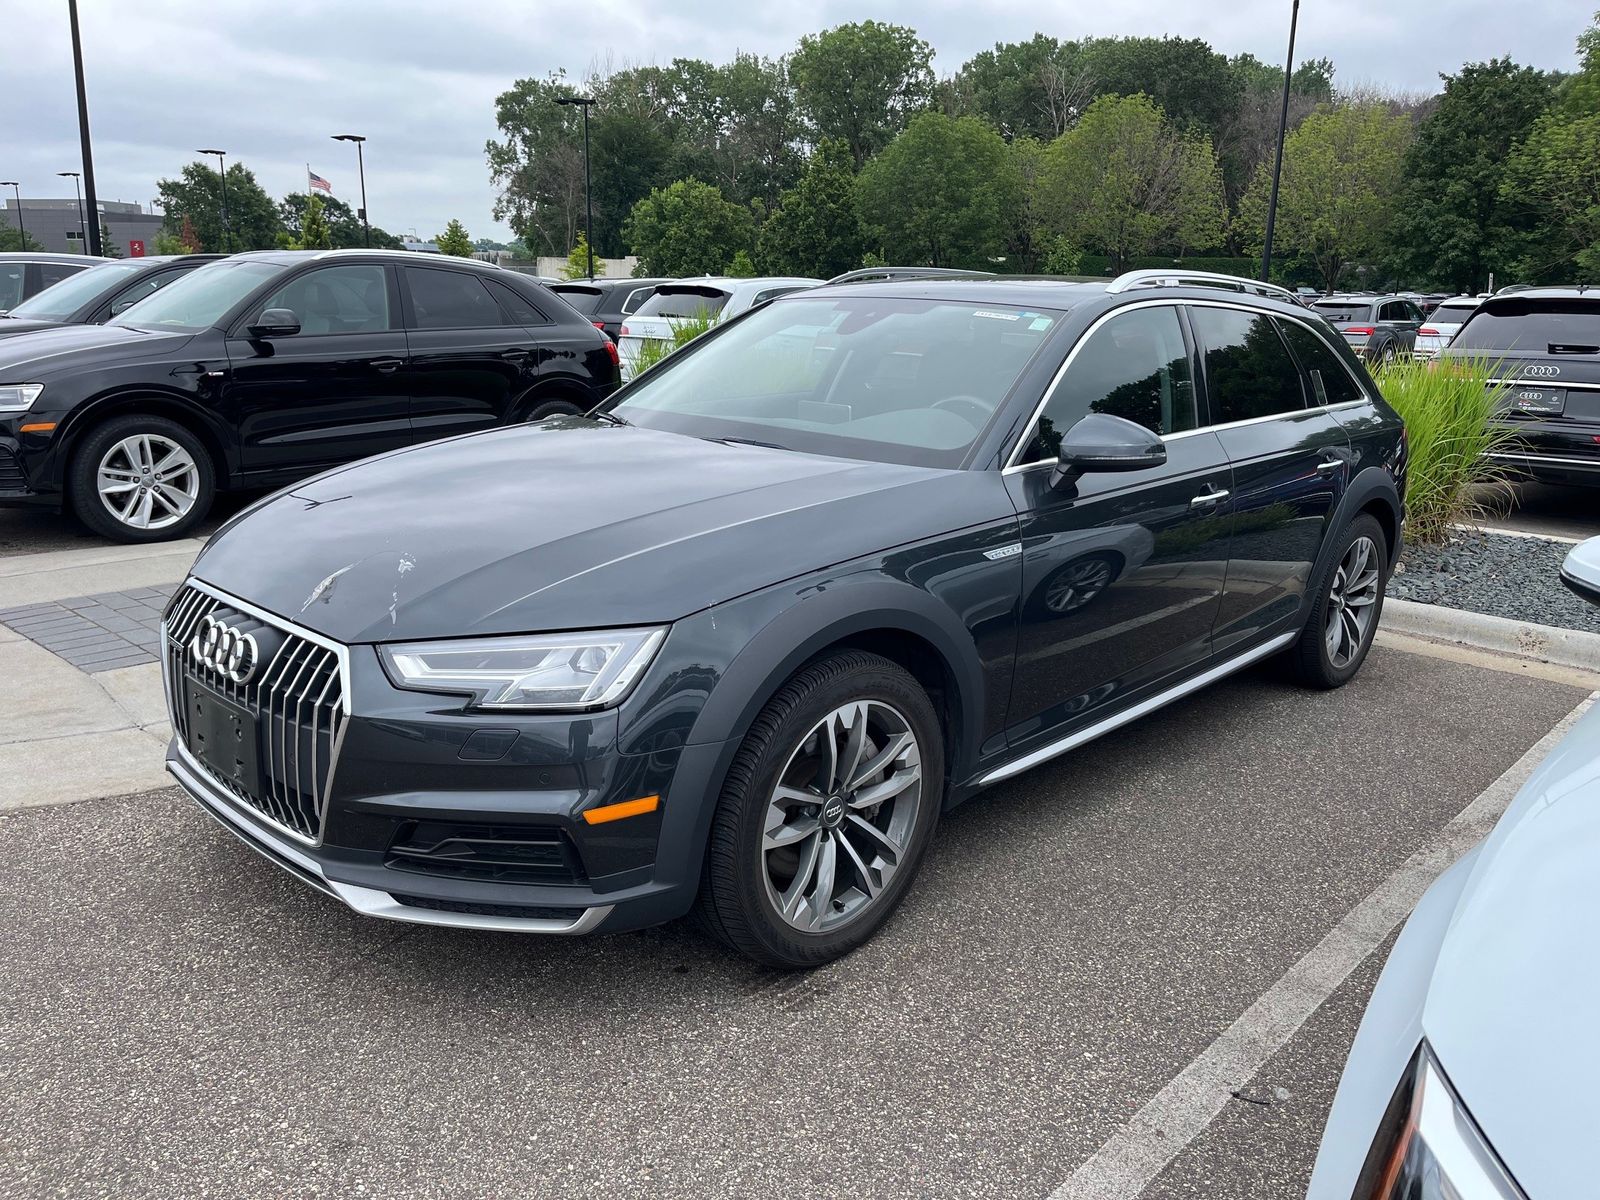 Used 2018 Audi allroad Premium Plus with VIN WA18NAF45JA197807 for sale in Minneapolis, Minnesota